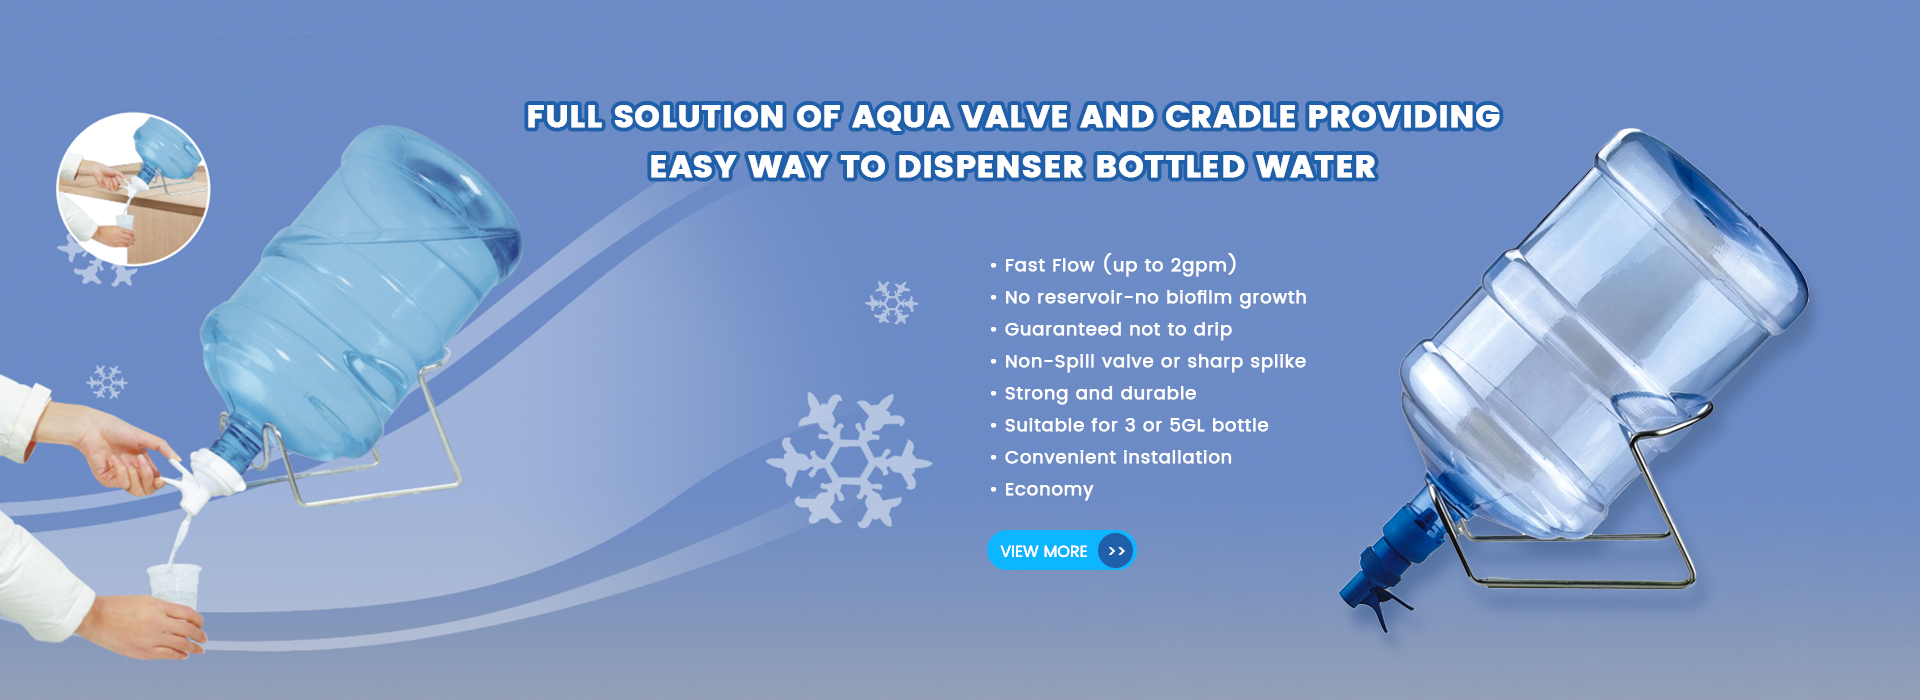 Aqua valve for 5 gallon